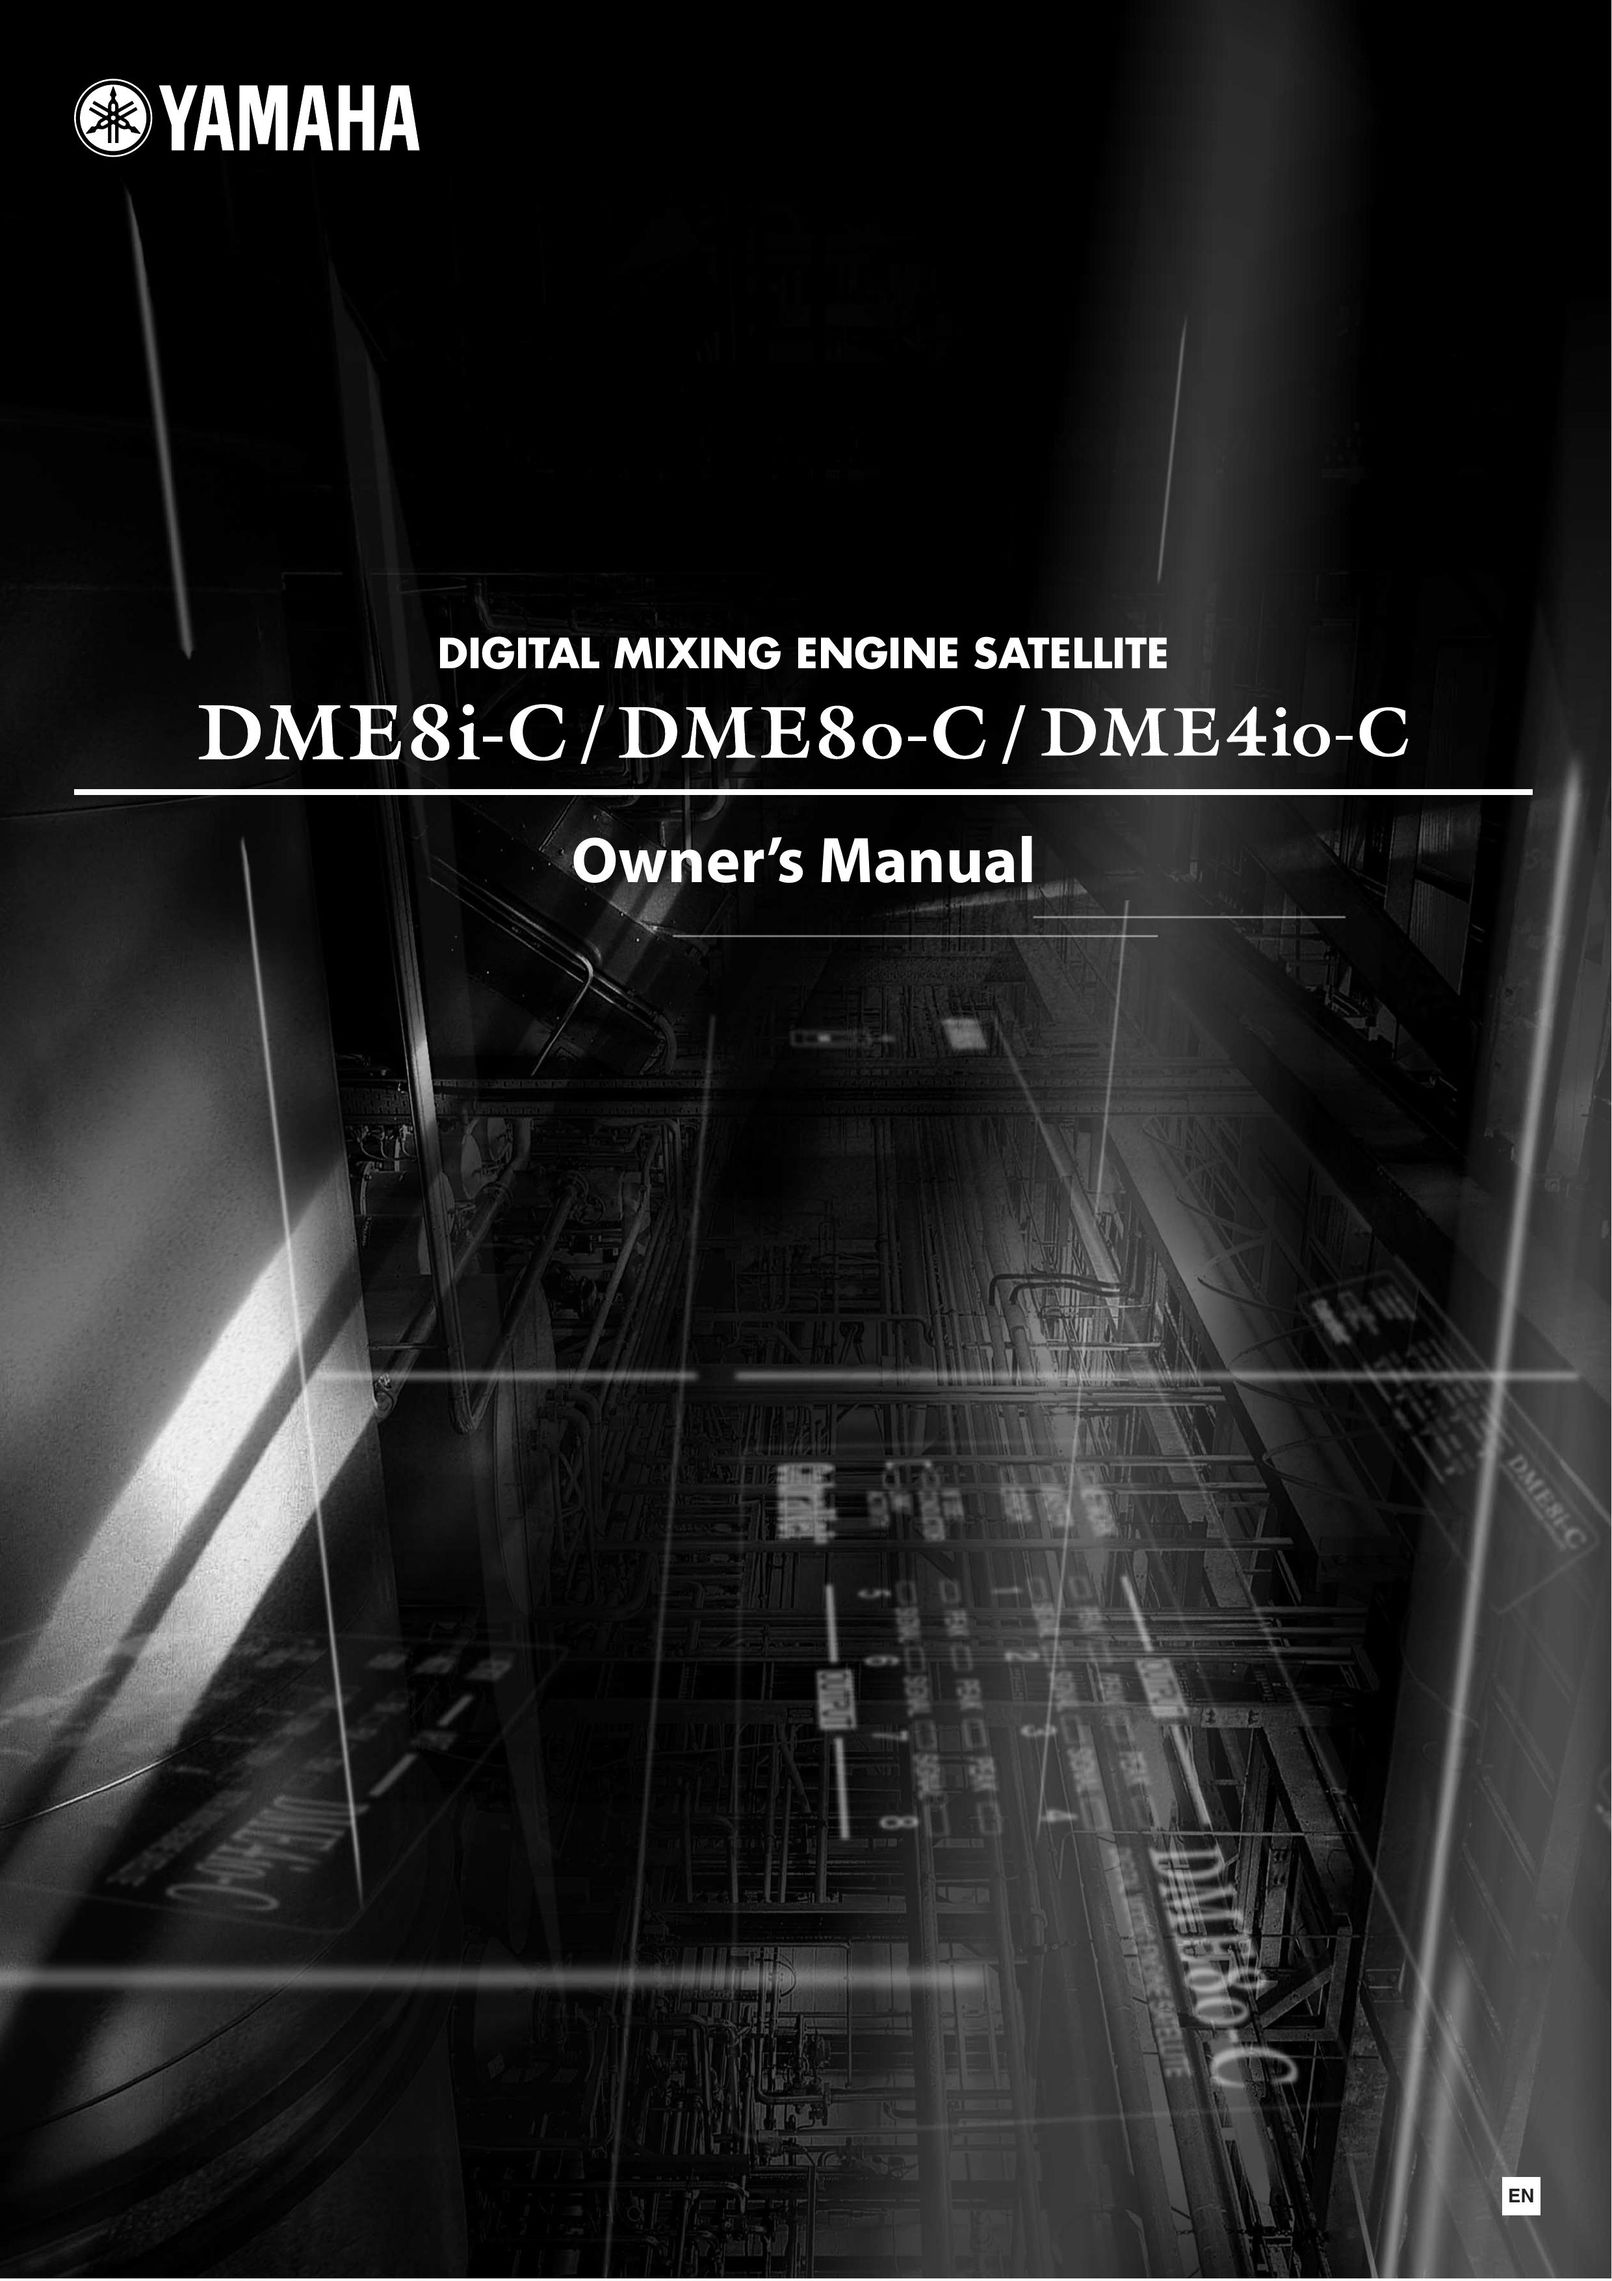 Yamaha DME4io-C Satellite TV System User Manual